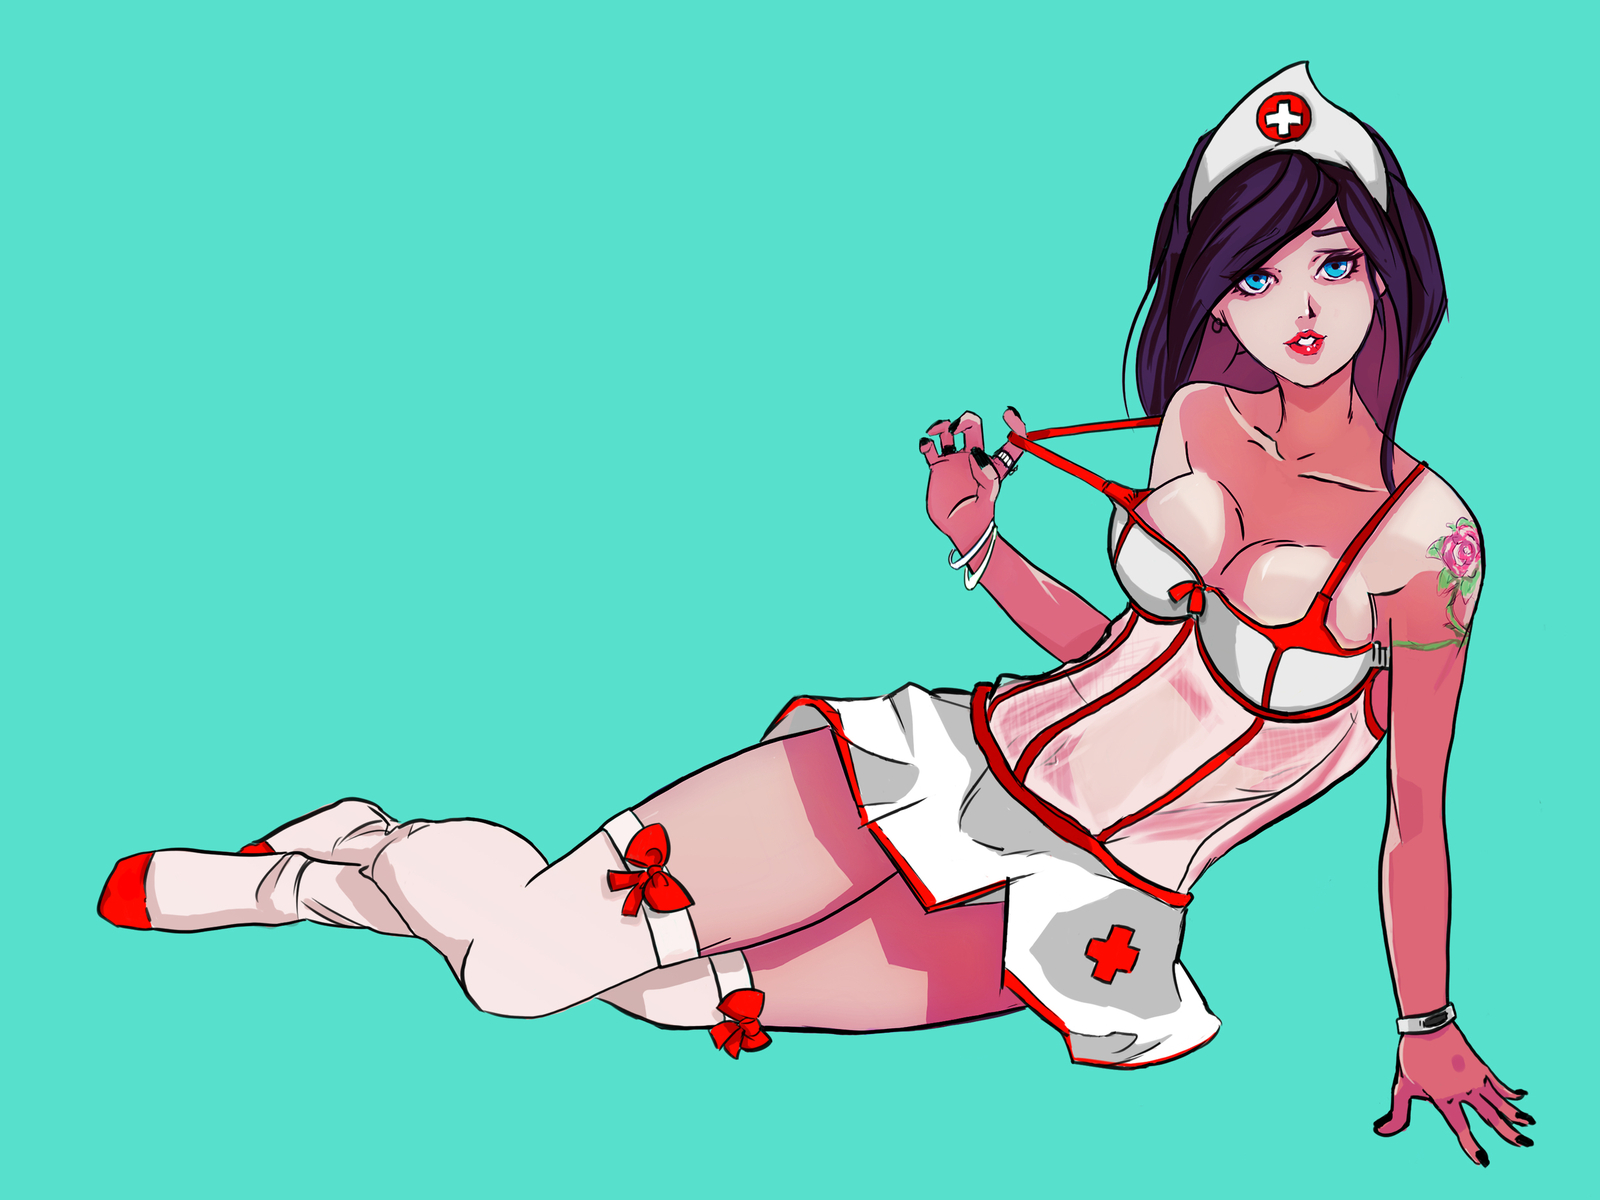 Anime Nurse designed by Antonio d'Amore. 